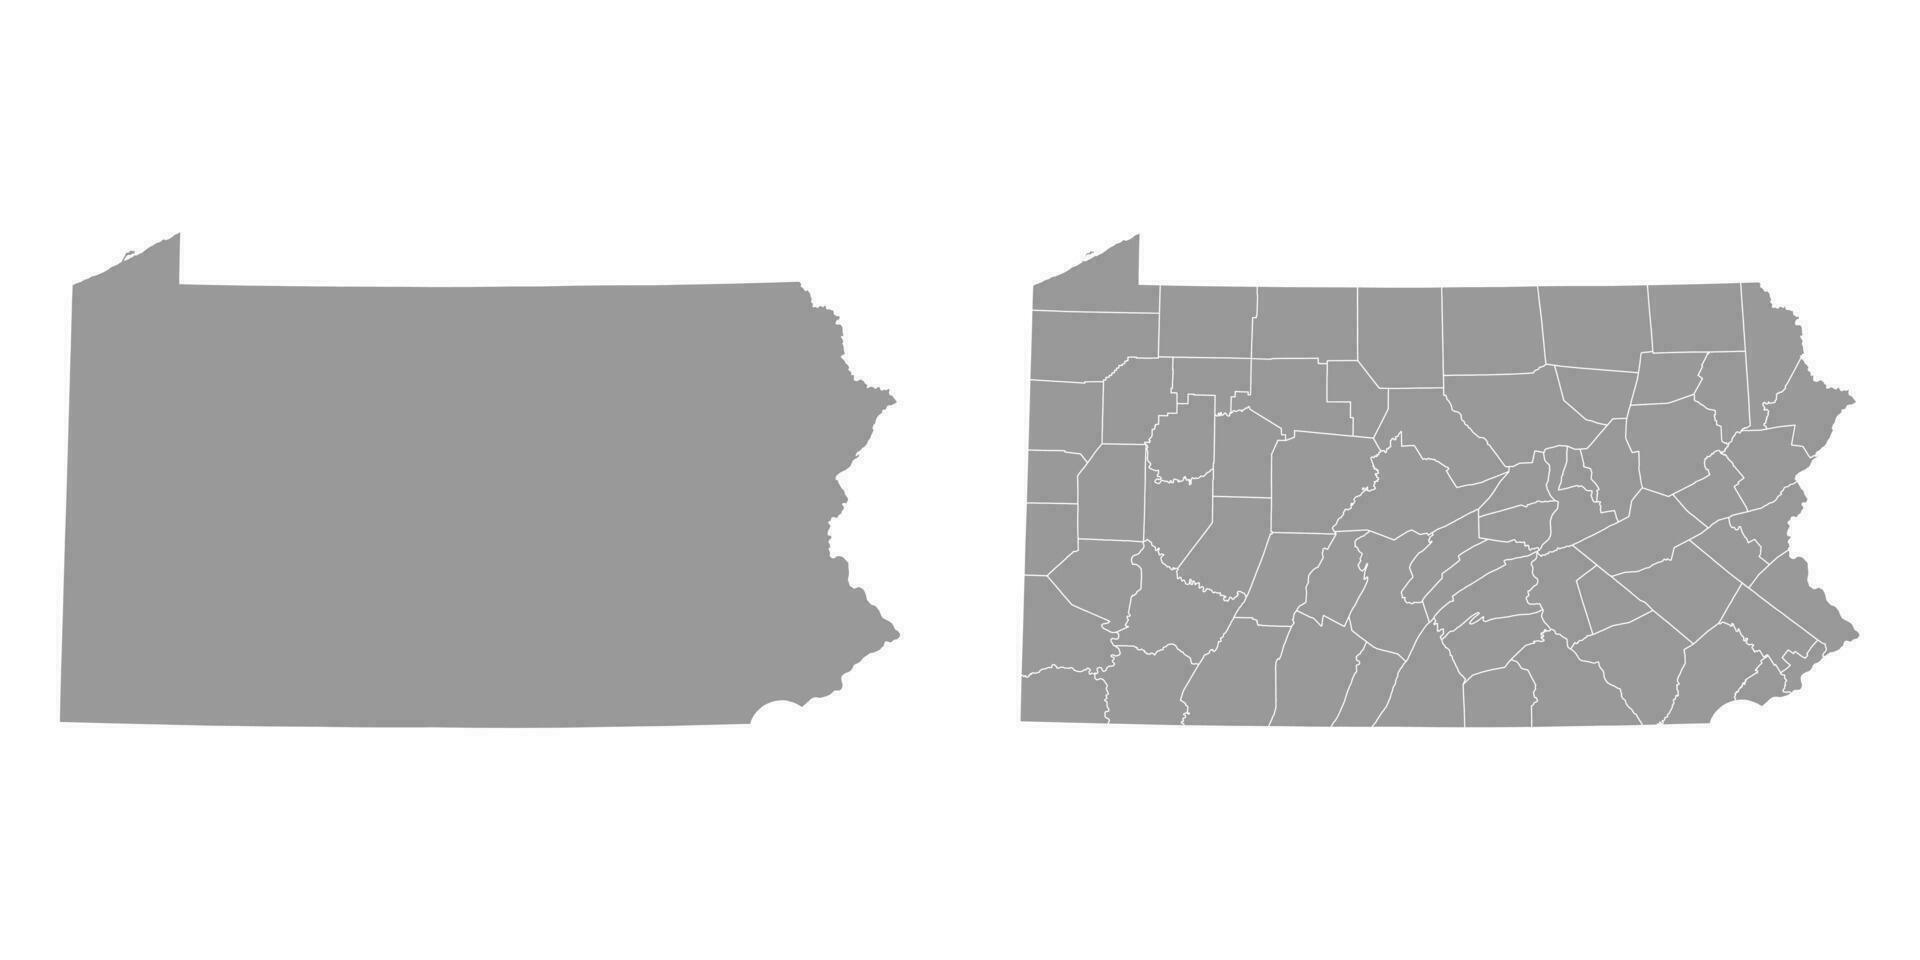 Pennsylvania state gray maps. Vector illustration.